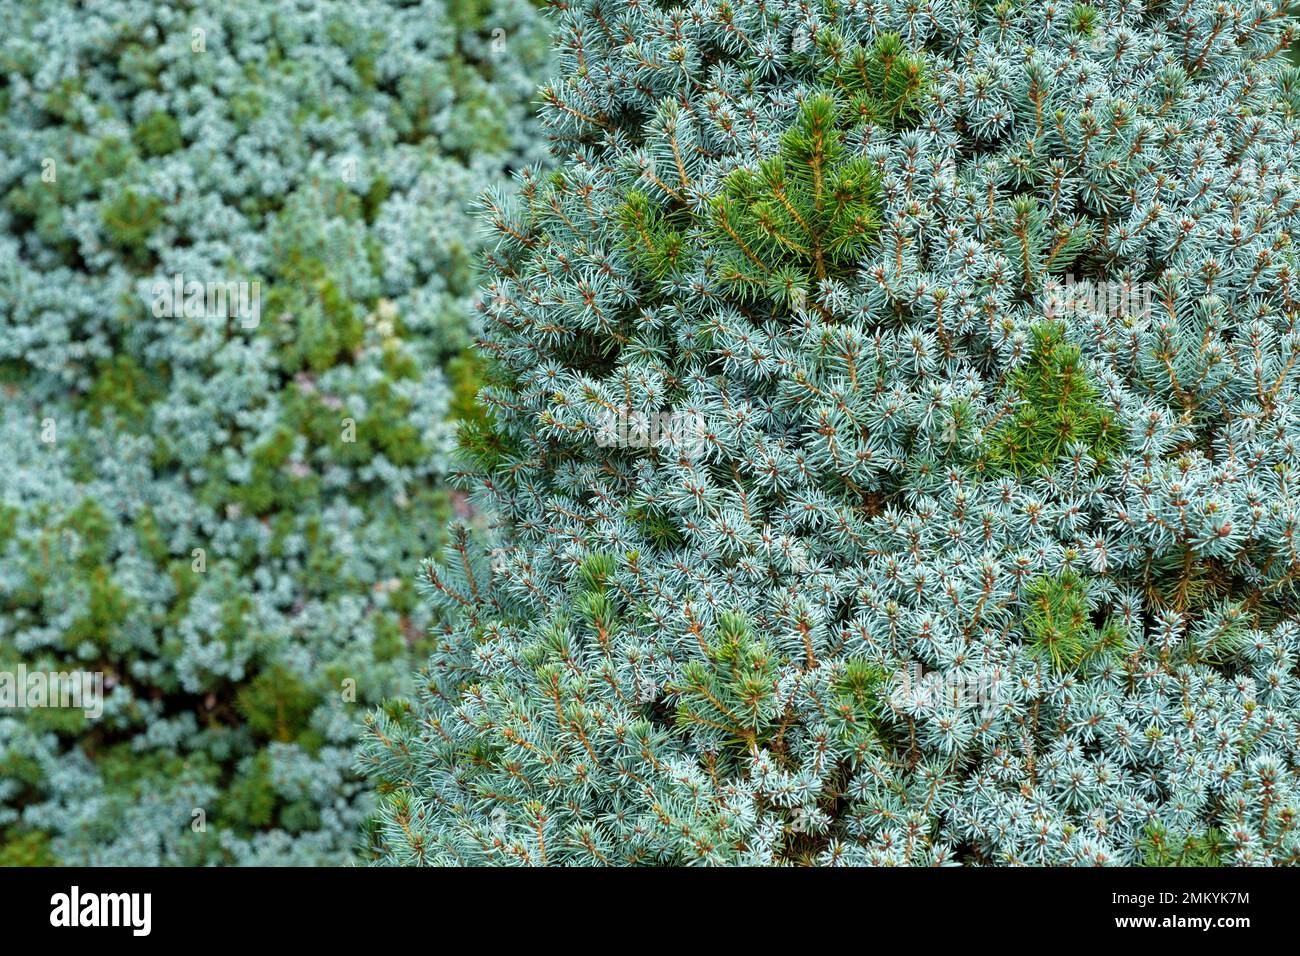 Picea glauca albertiana Alberta Blue, Alberta spruce Alberta Blue, bushy dwarf conifer, with blue-grey needles Stock Photo